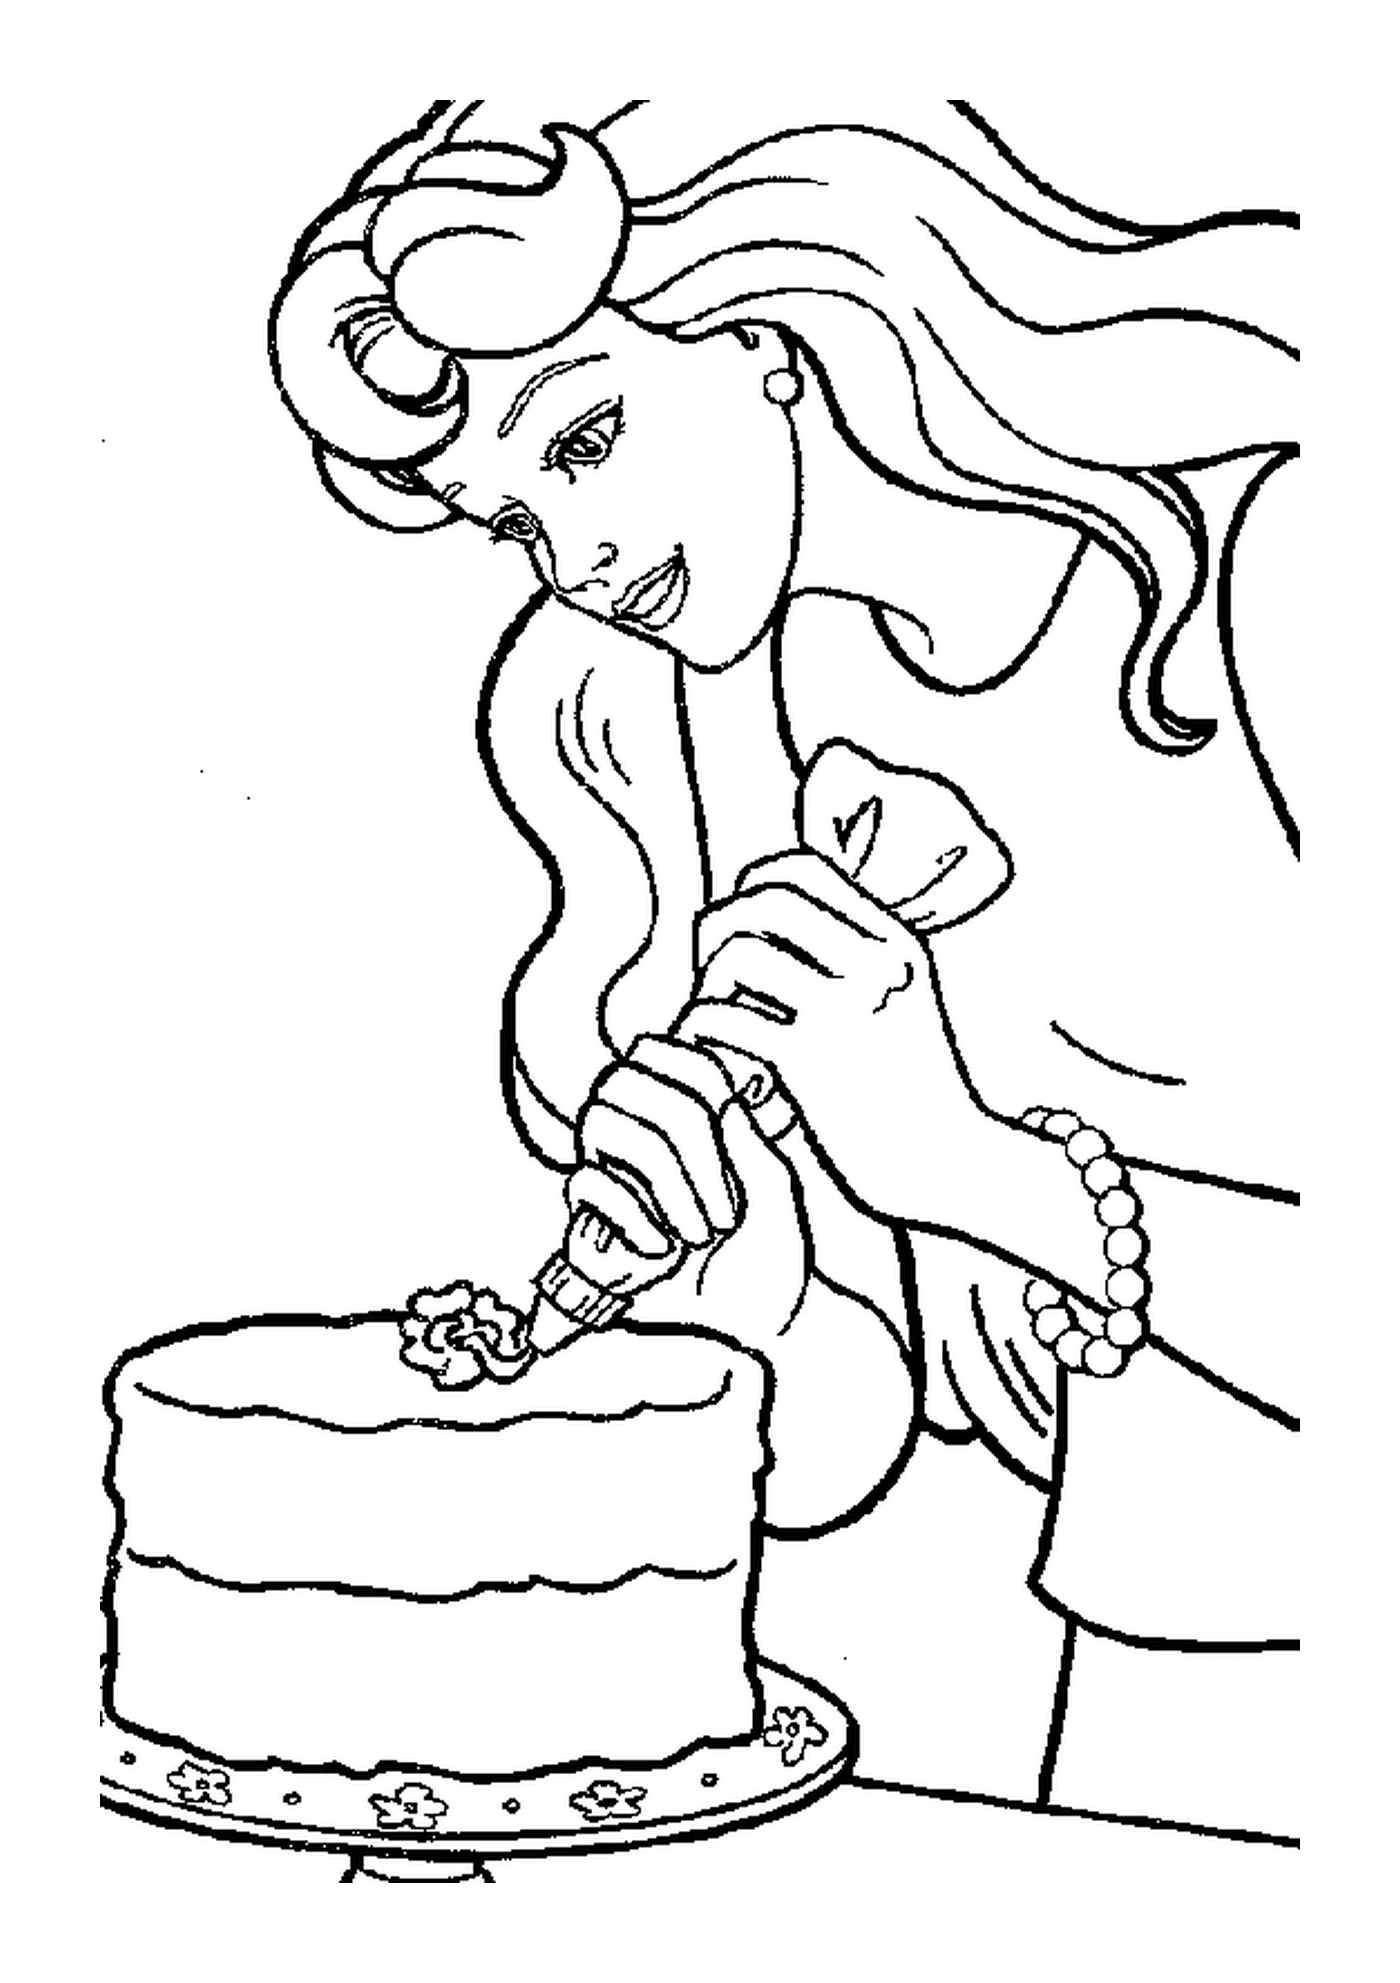  Barbie cortando un pastel con un cuchillo 